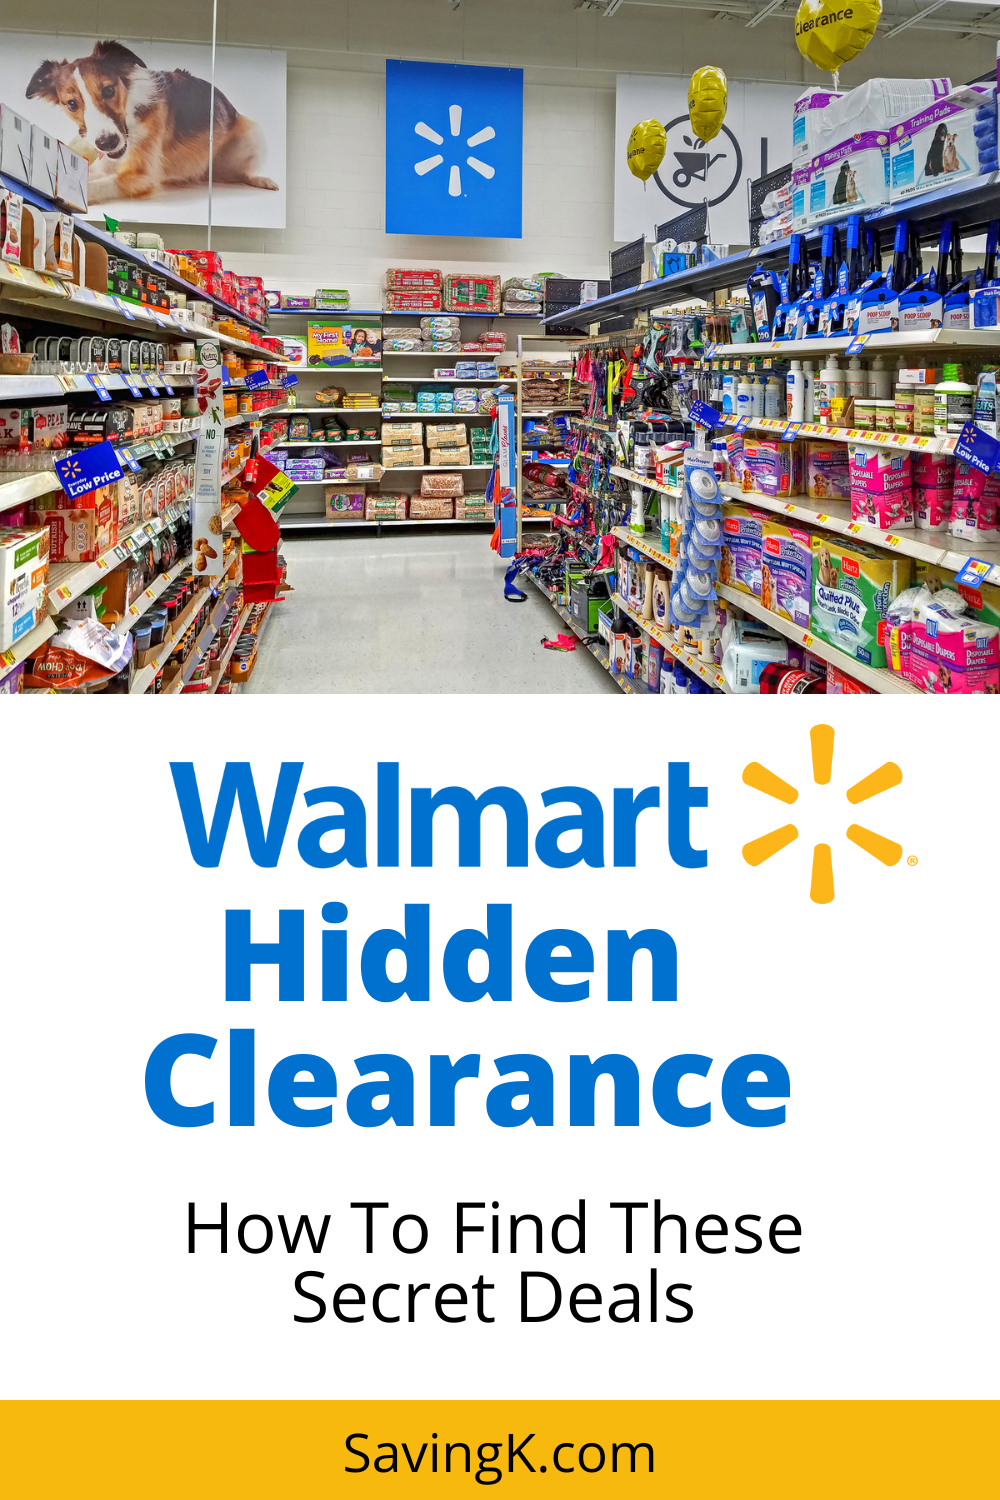 Walmart Hidden Clearance – How To Find These Secret Deals